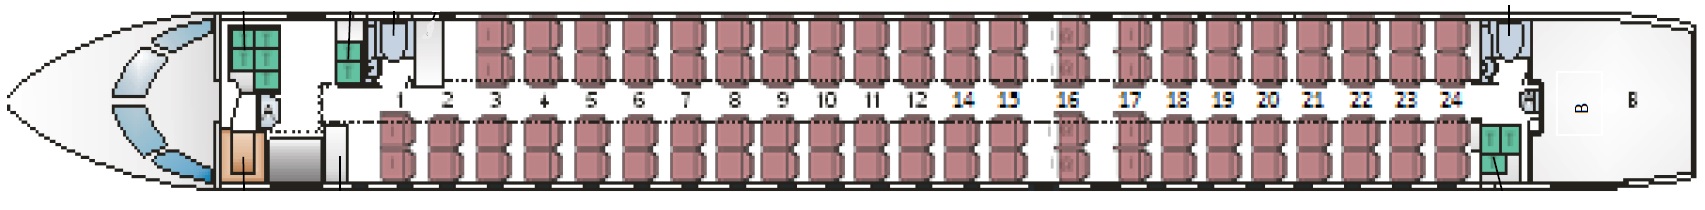 CRJ900 88 Sædekonfiguration